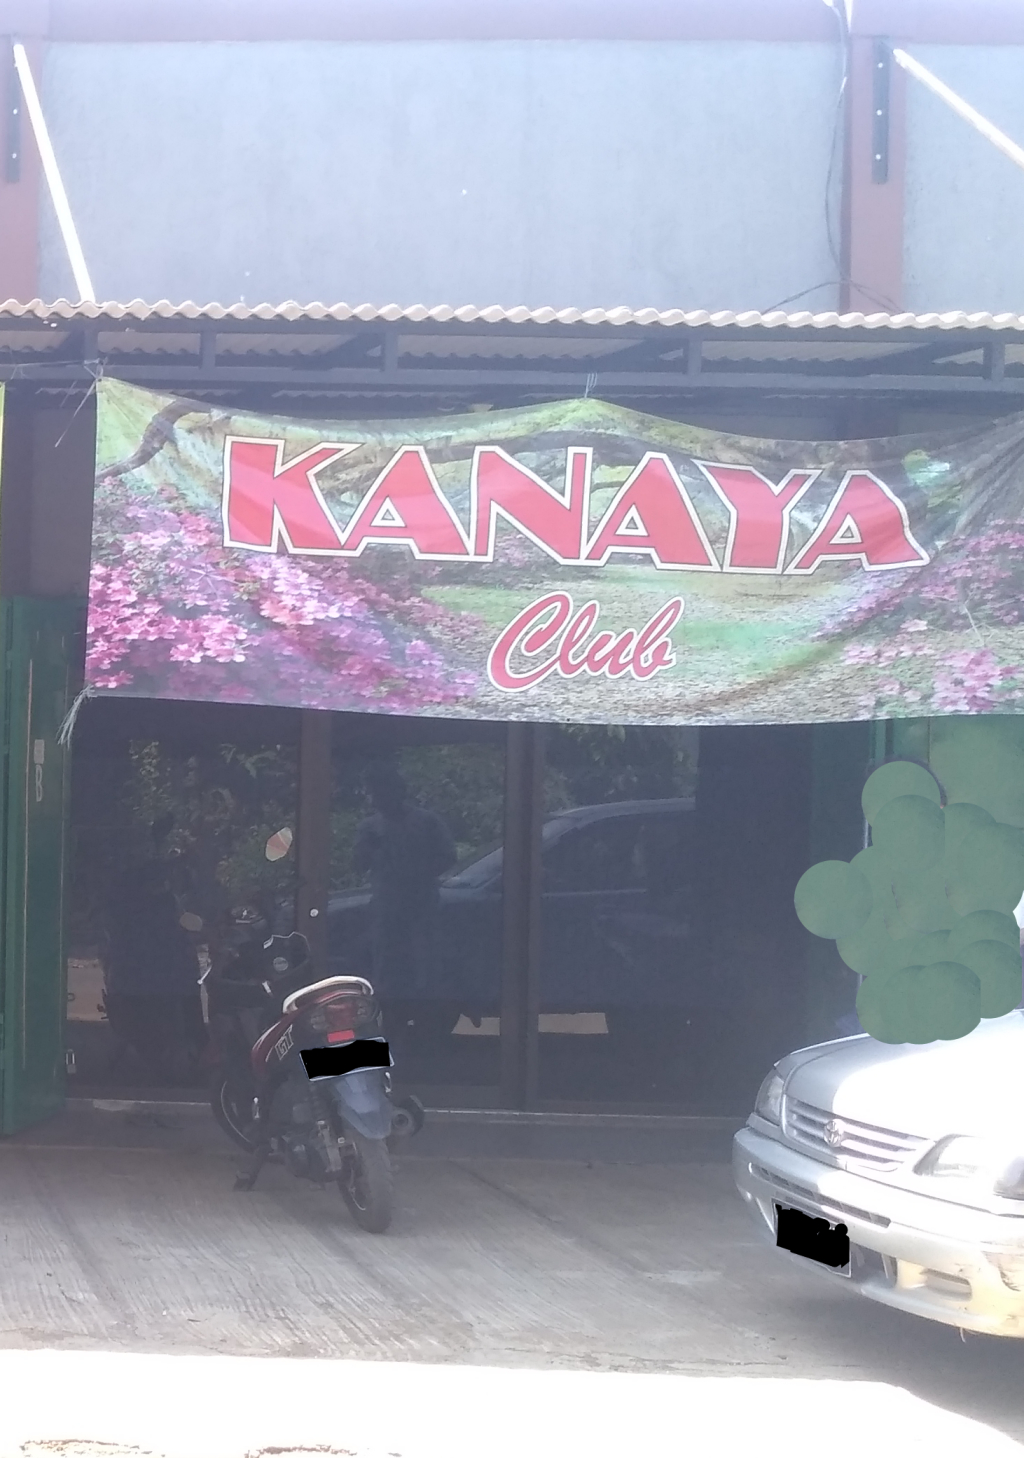 Kanaya Club